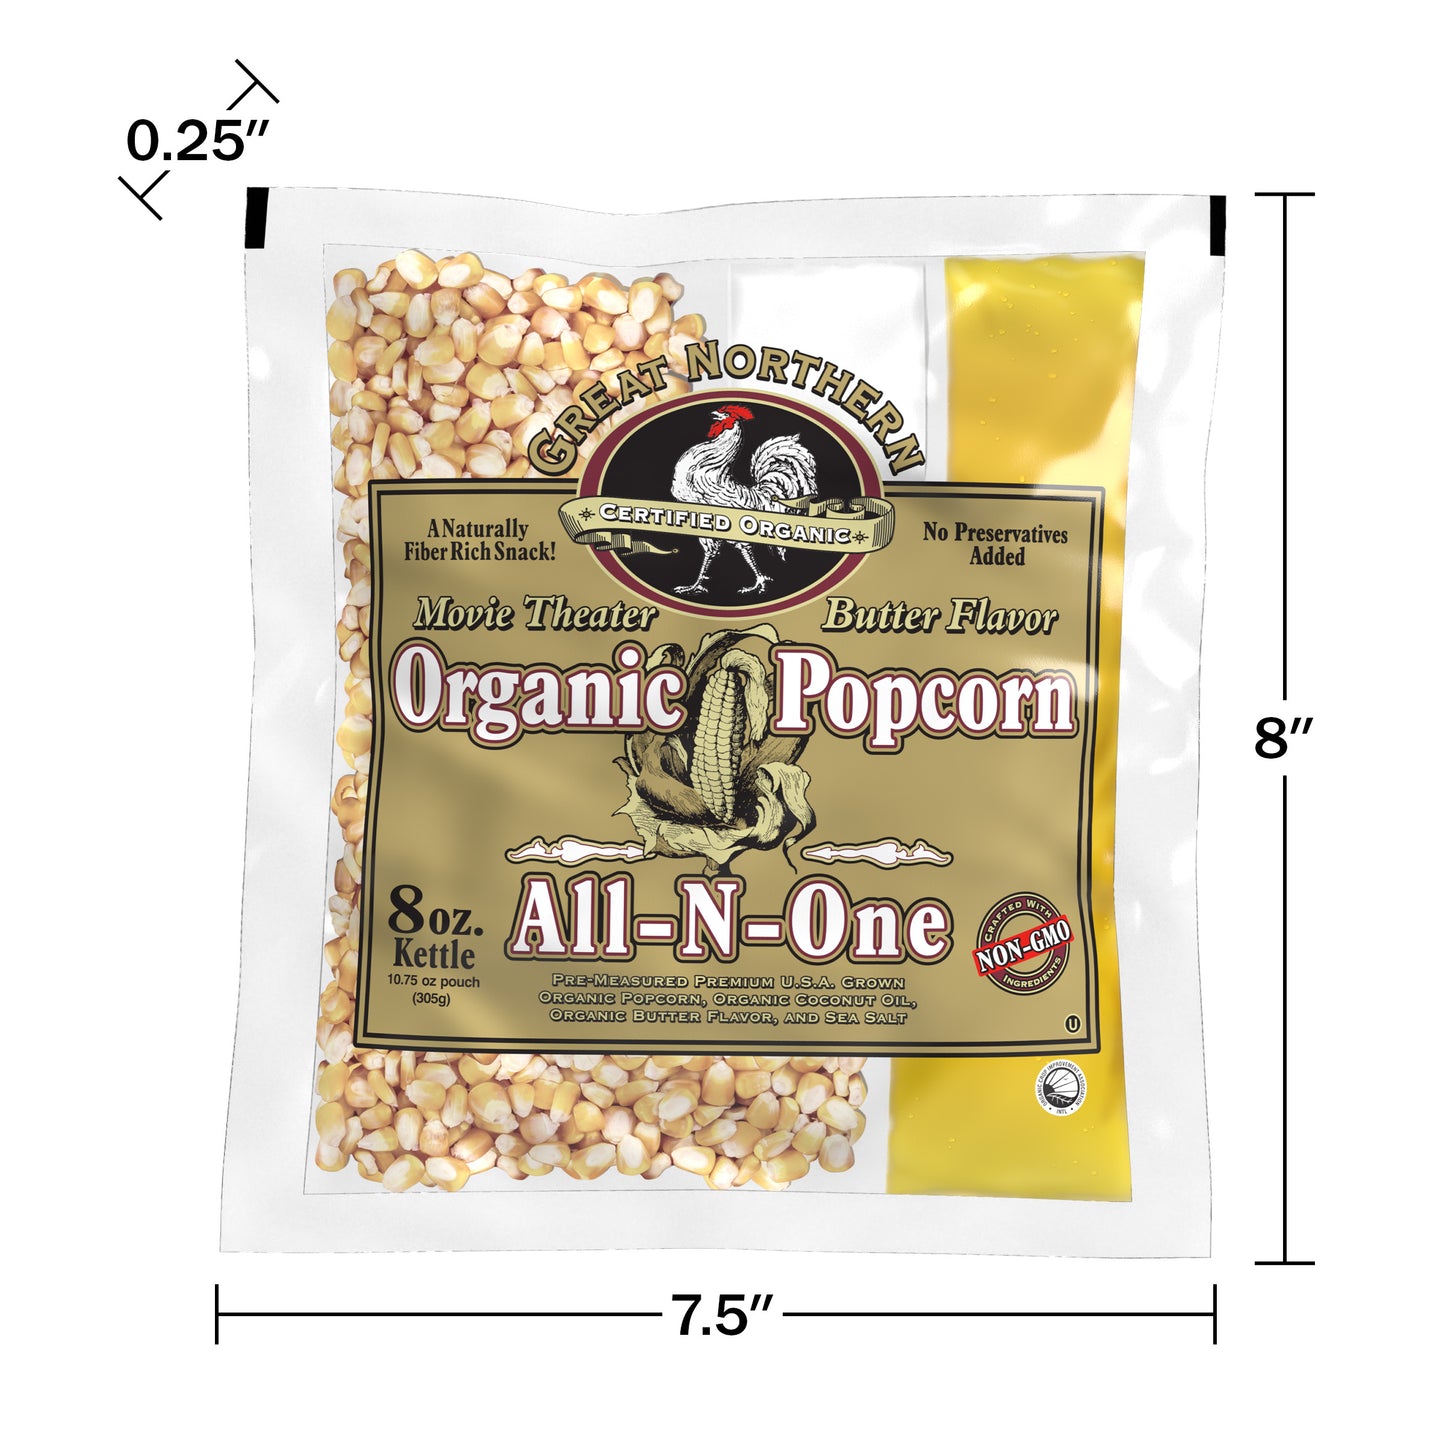 GREAT NORTHERN POPCORN COMPANY - 8 oz Popcorn Packs –